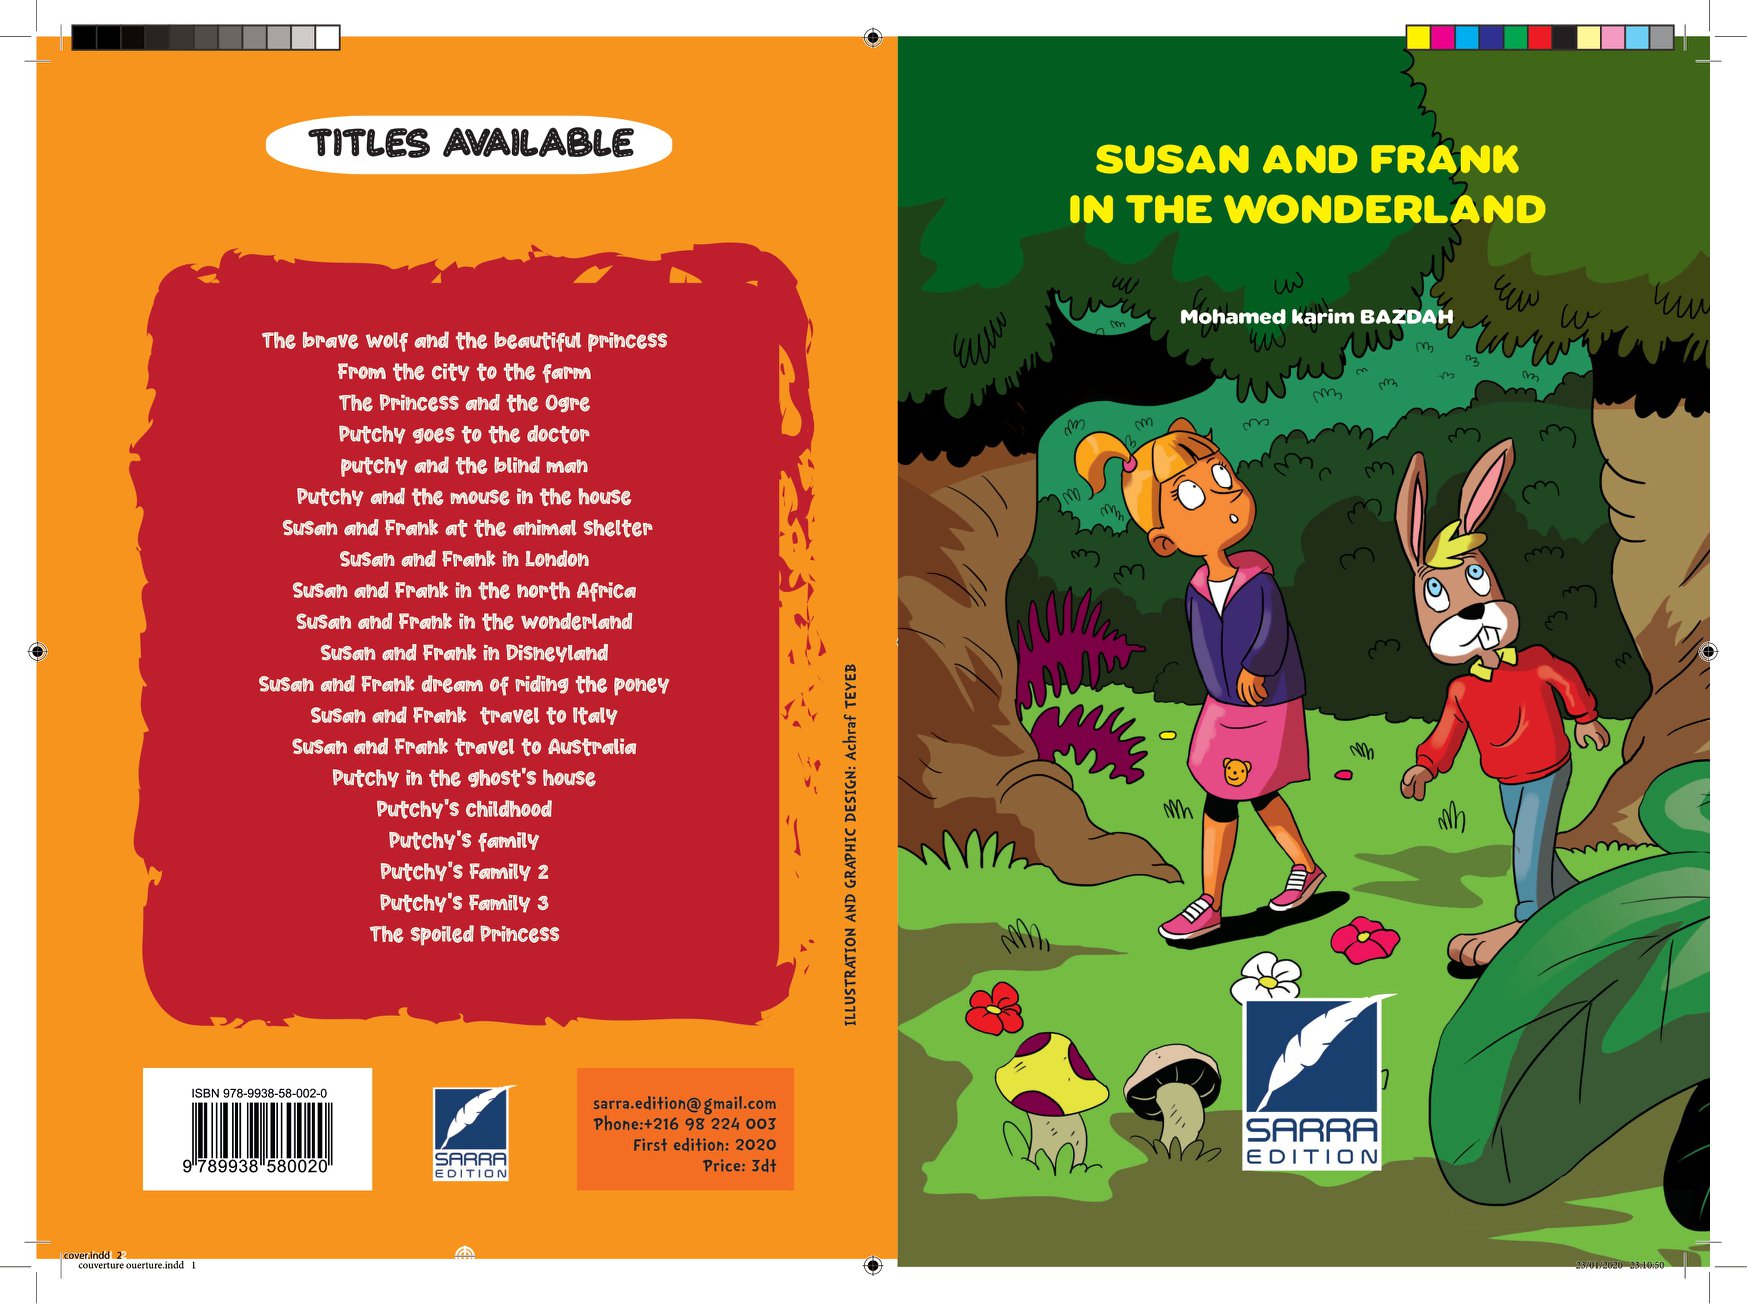 Susan and Frank ine the wonderland